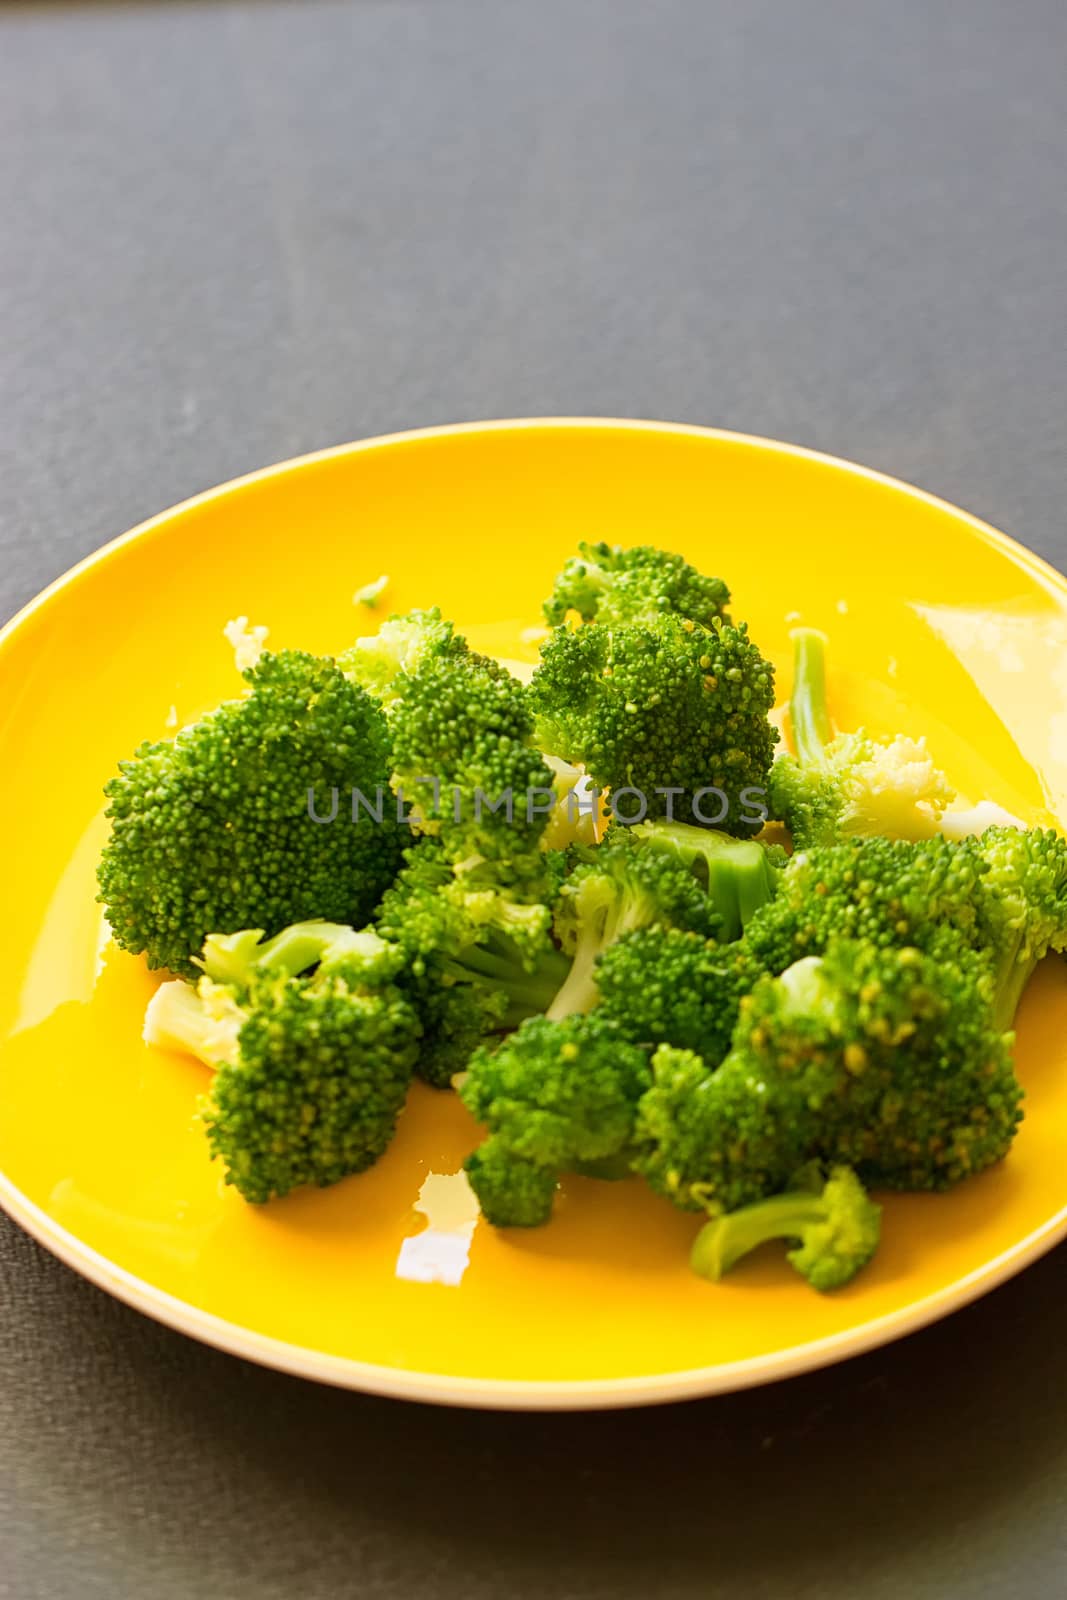 Fresh broccoli cut in yellow plate by victosha